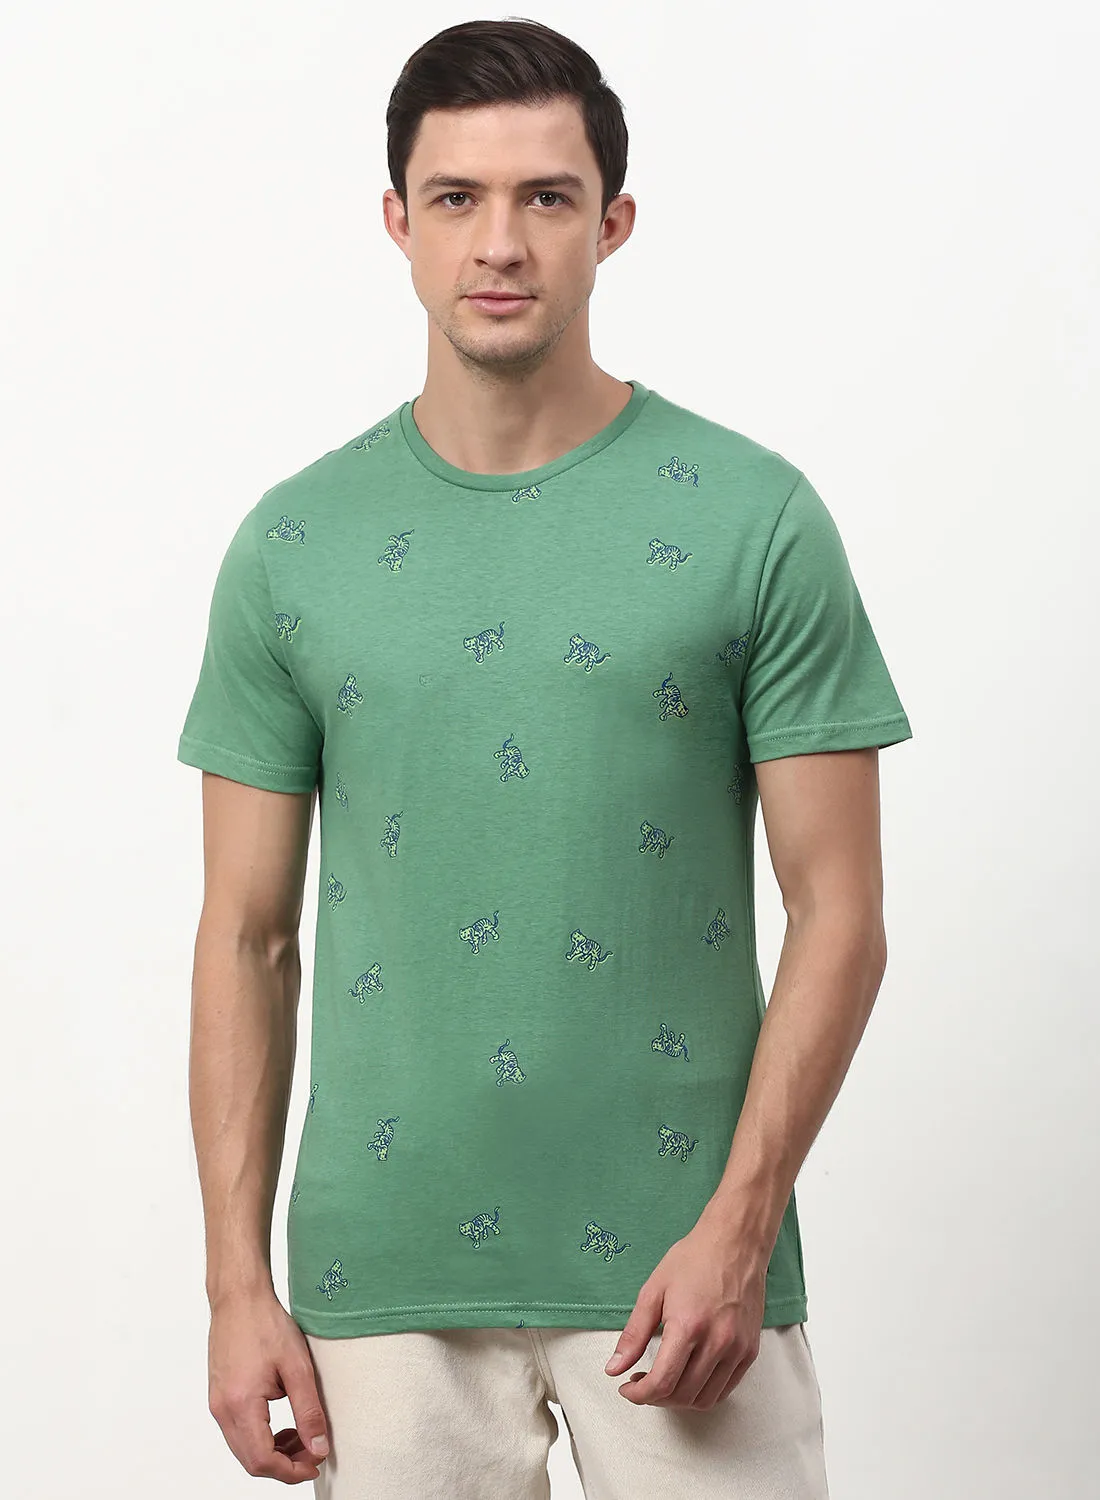 ABOF Animal Printed Crew Neck Regular Fit T-Shirt Fern Green